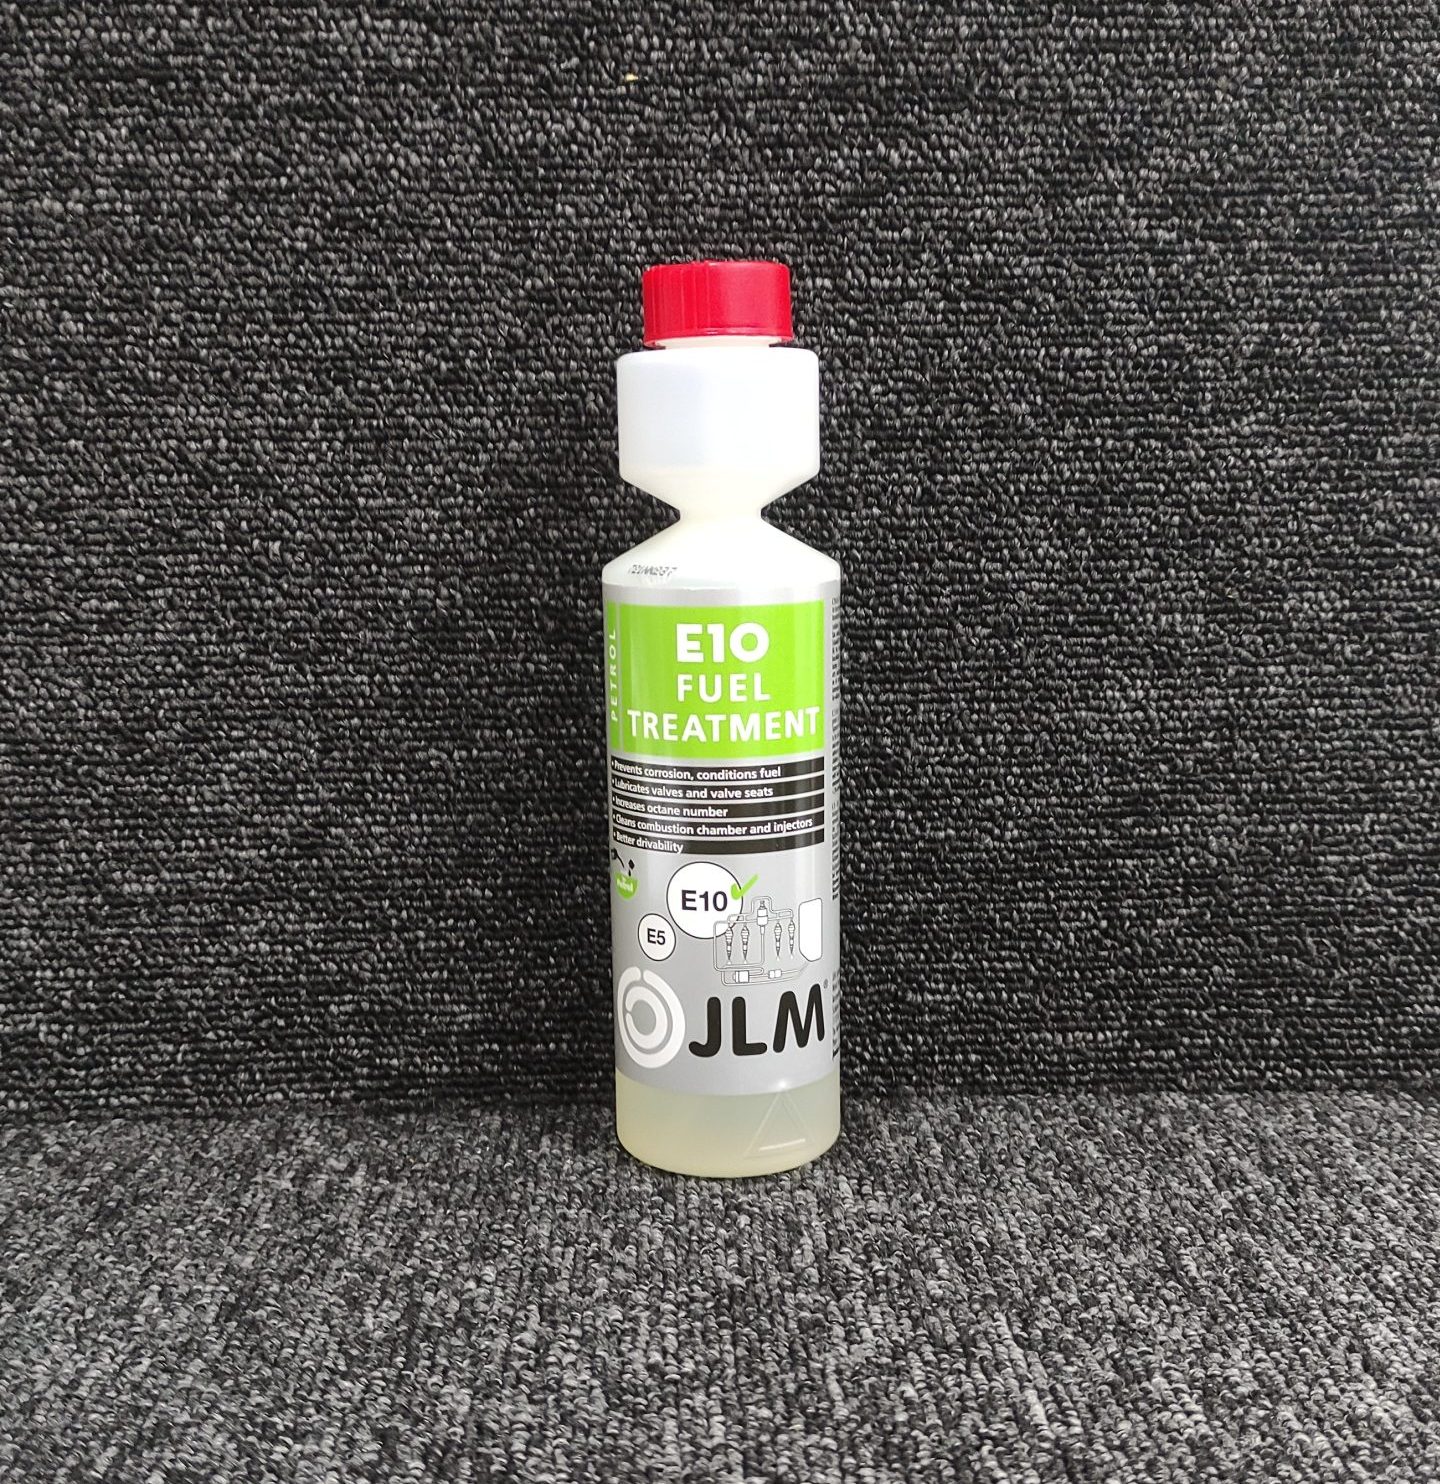 JLM Kraftstoff-Additive / Motoröl-Additive - J02202 